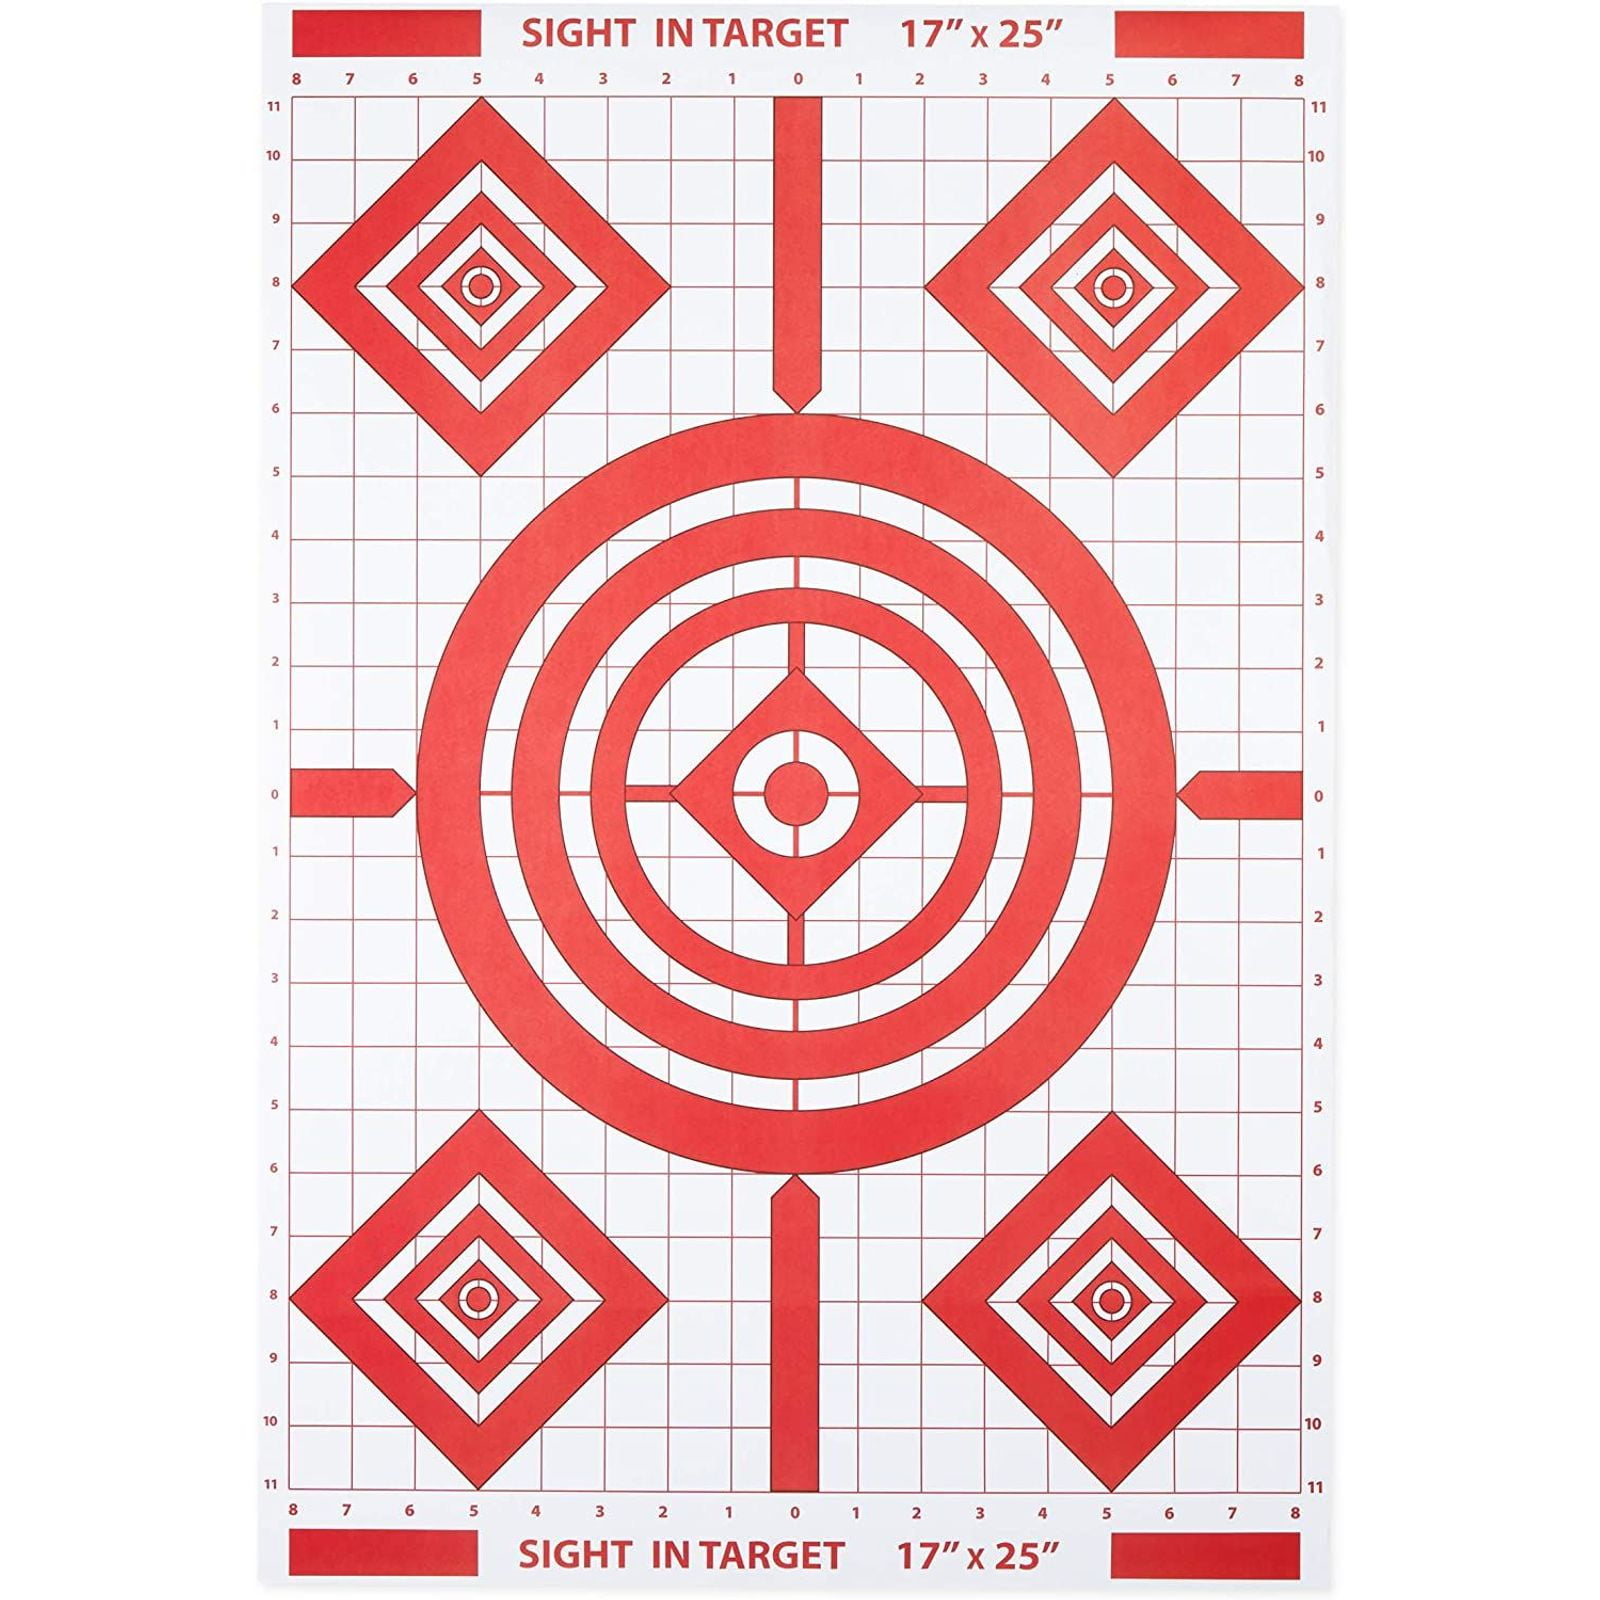 Hunting Practice Shooting Range Paper Silhouette Targets 50 Pack 12.5 x 17 In 